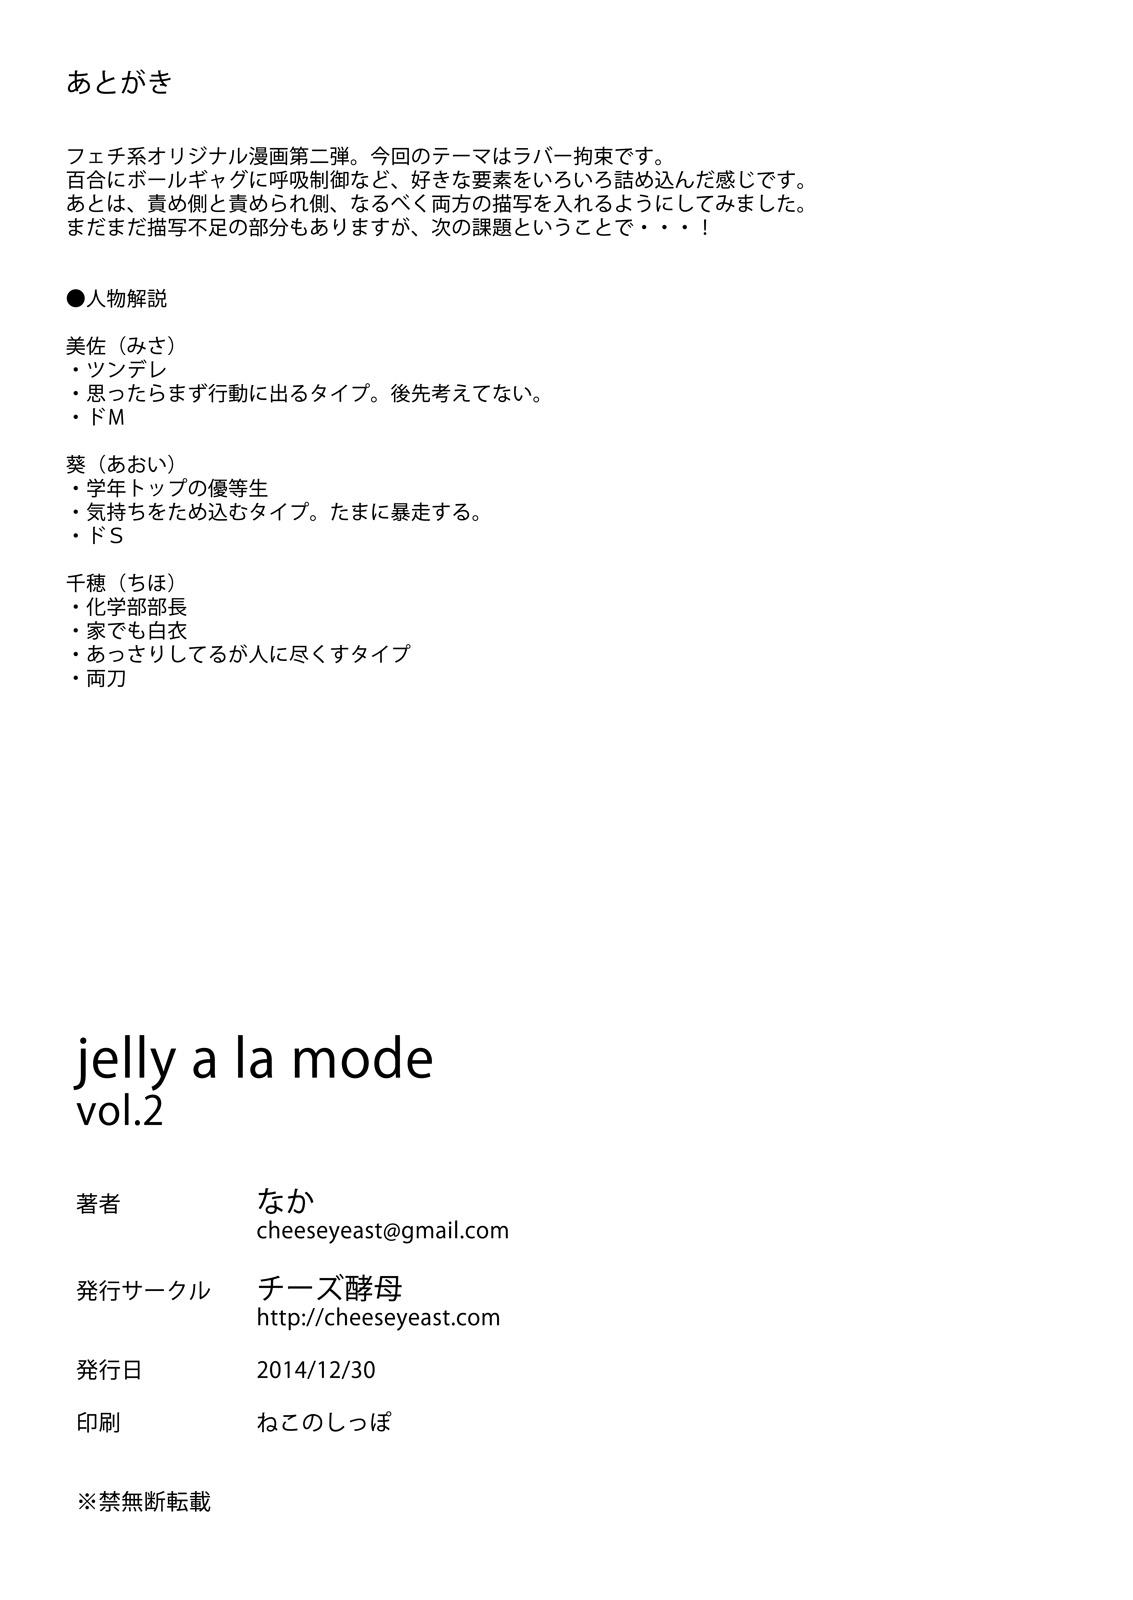 jelly a la mode Vol. 2 31